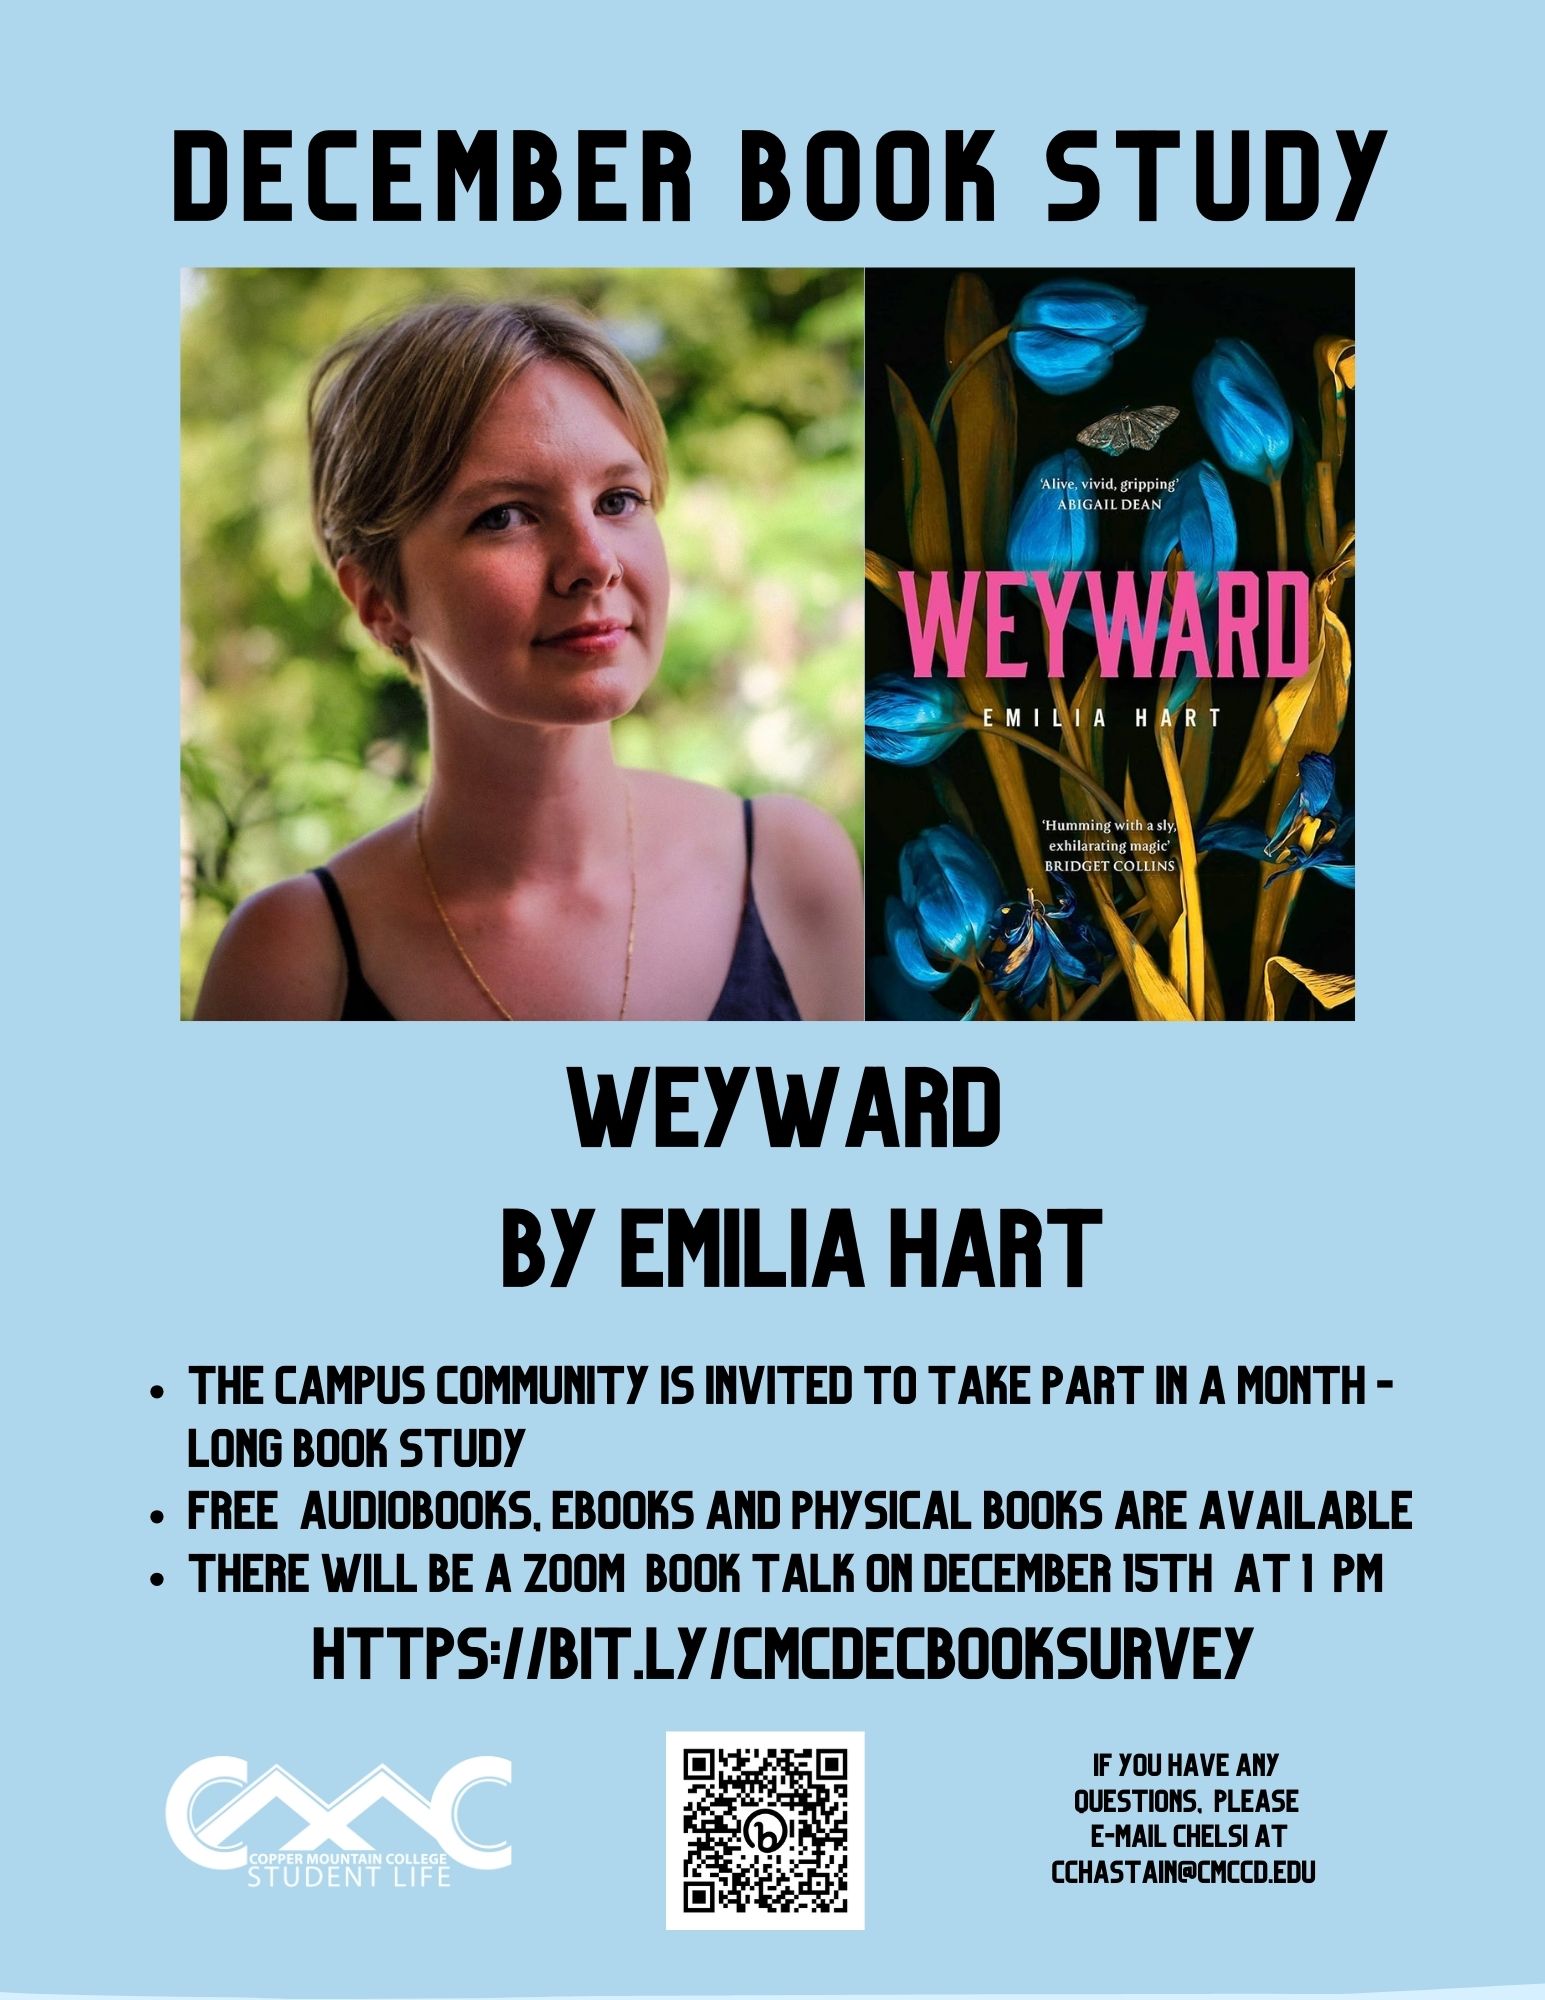 December Book Study of Weyward by Emilia Hart